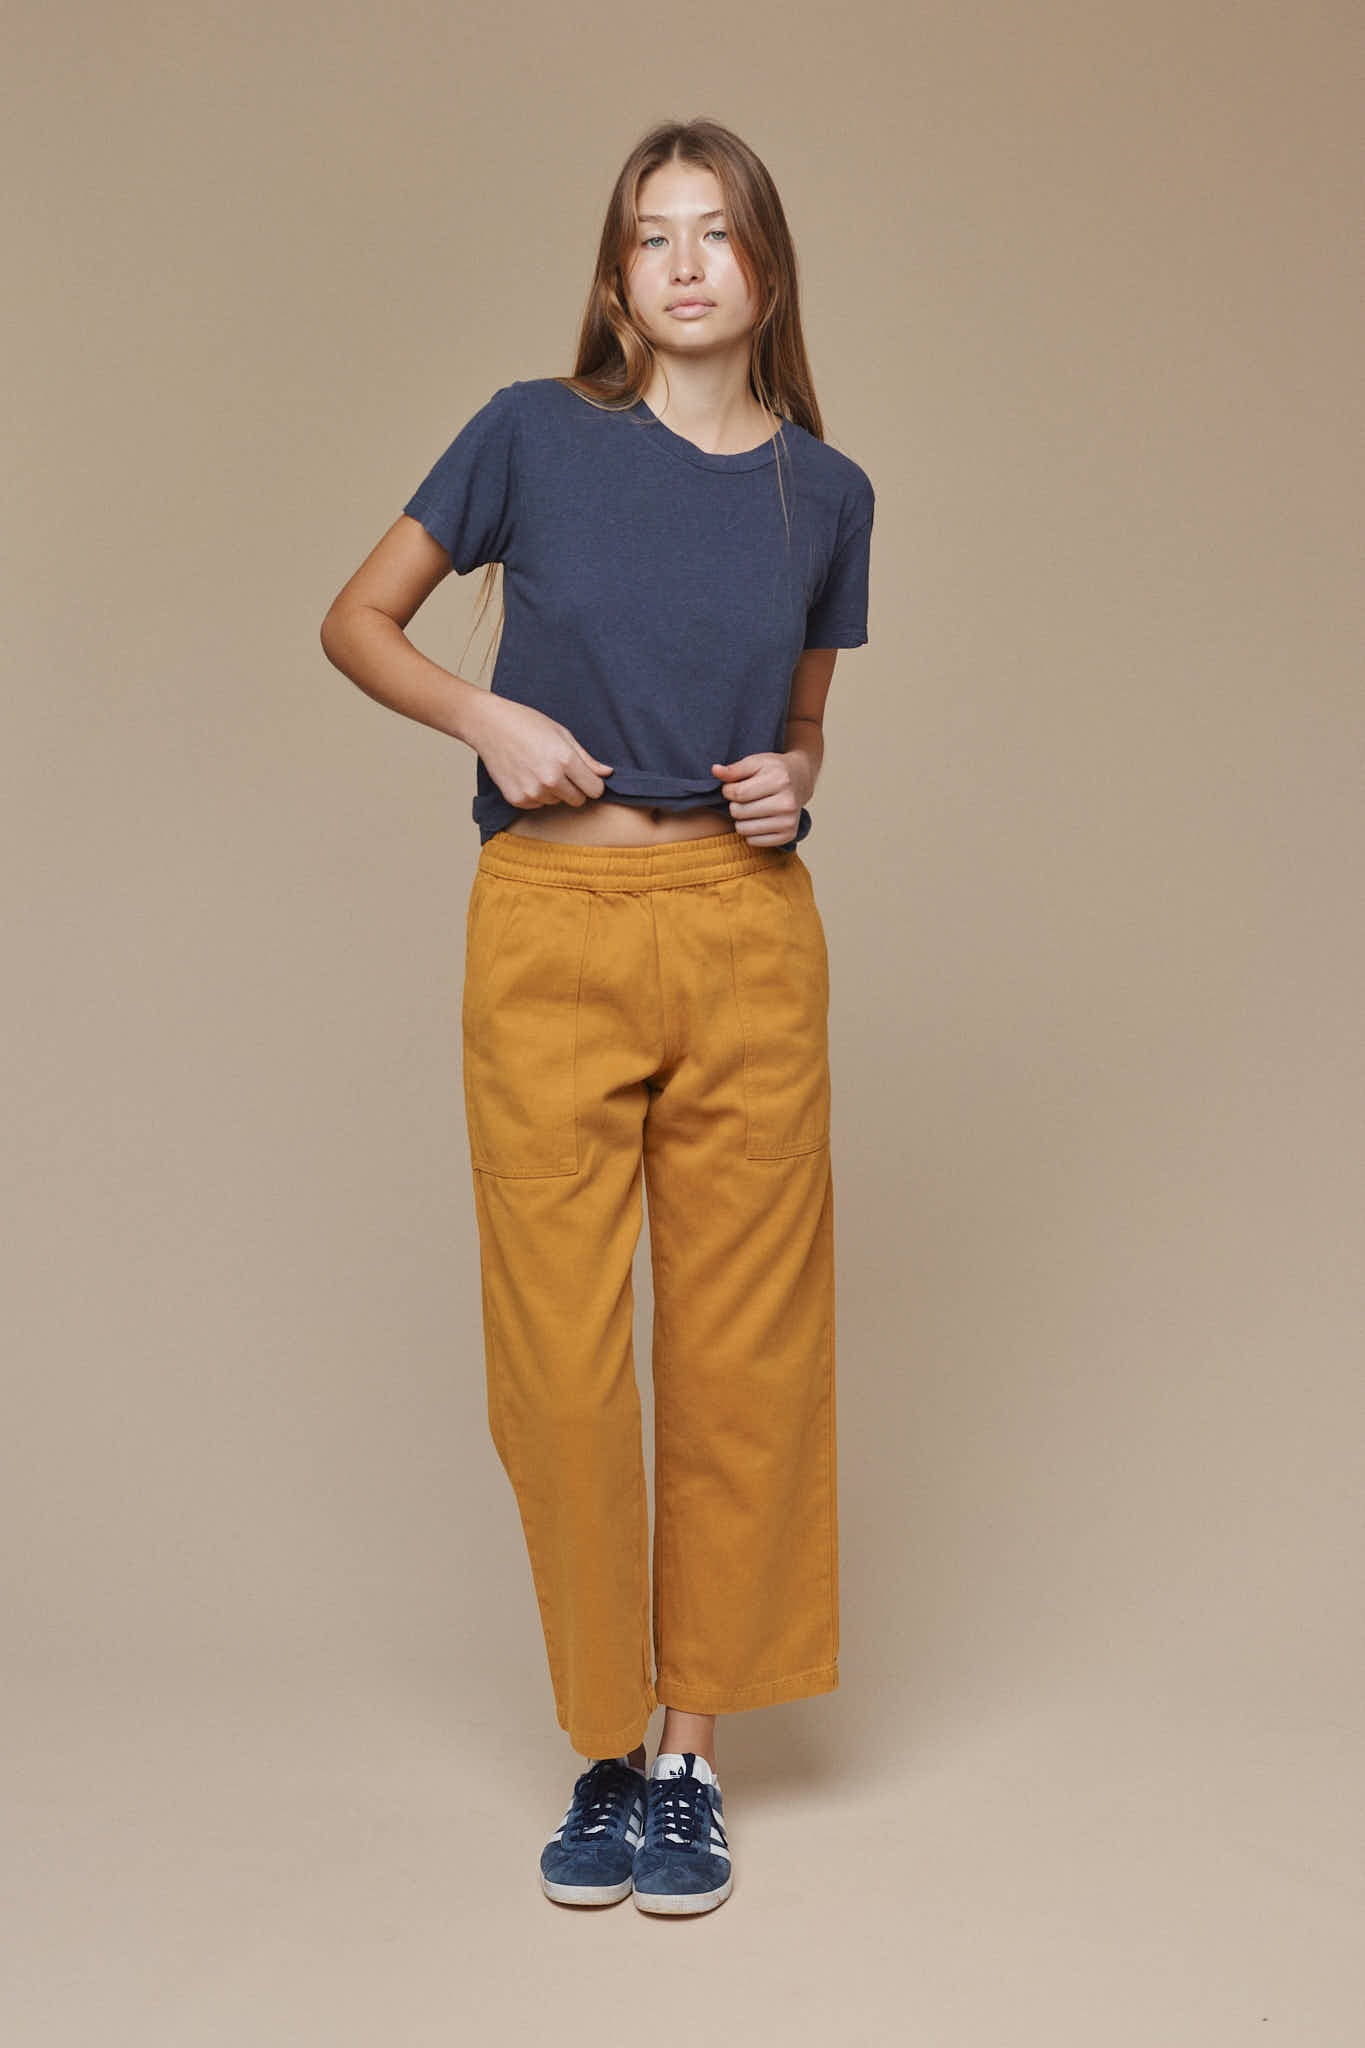 Ocean Pant | Jungmaven Hemp Clothing & Accessories / model_desc: Katriel is 5’9” wearing XS